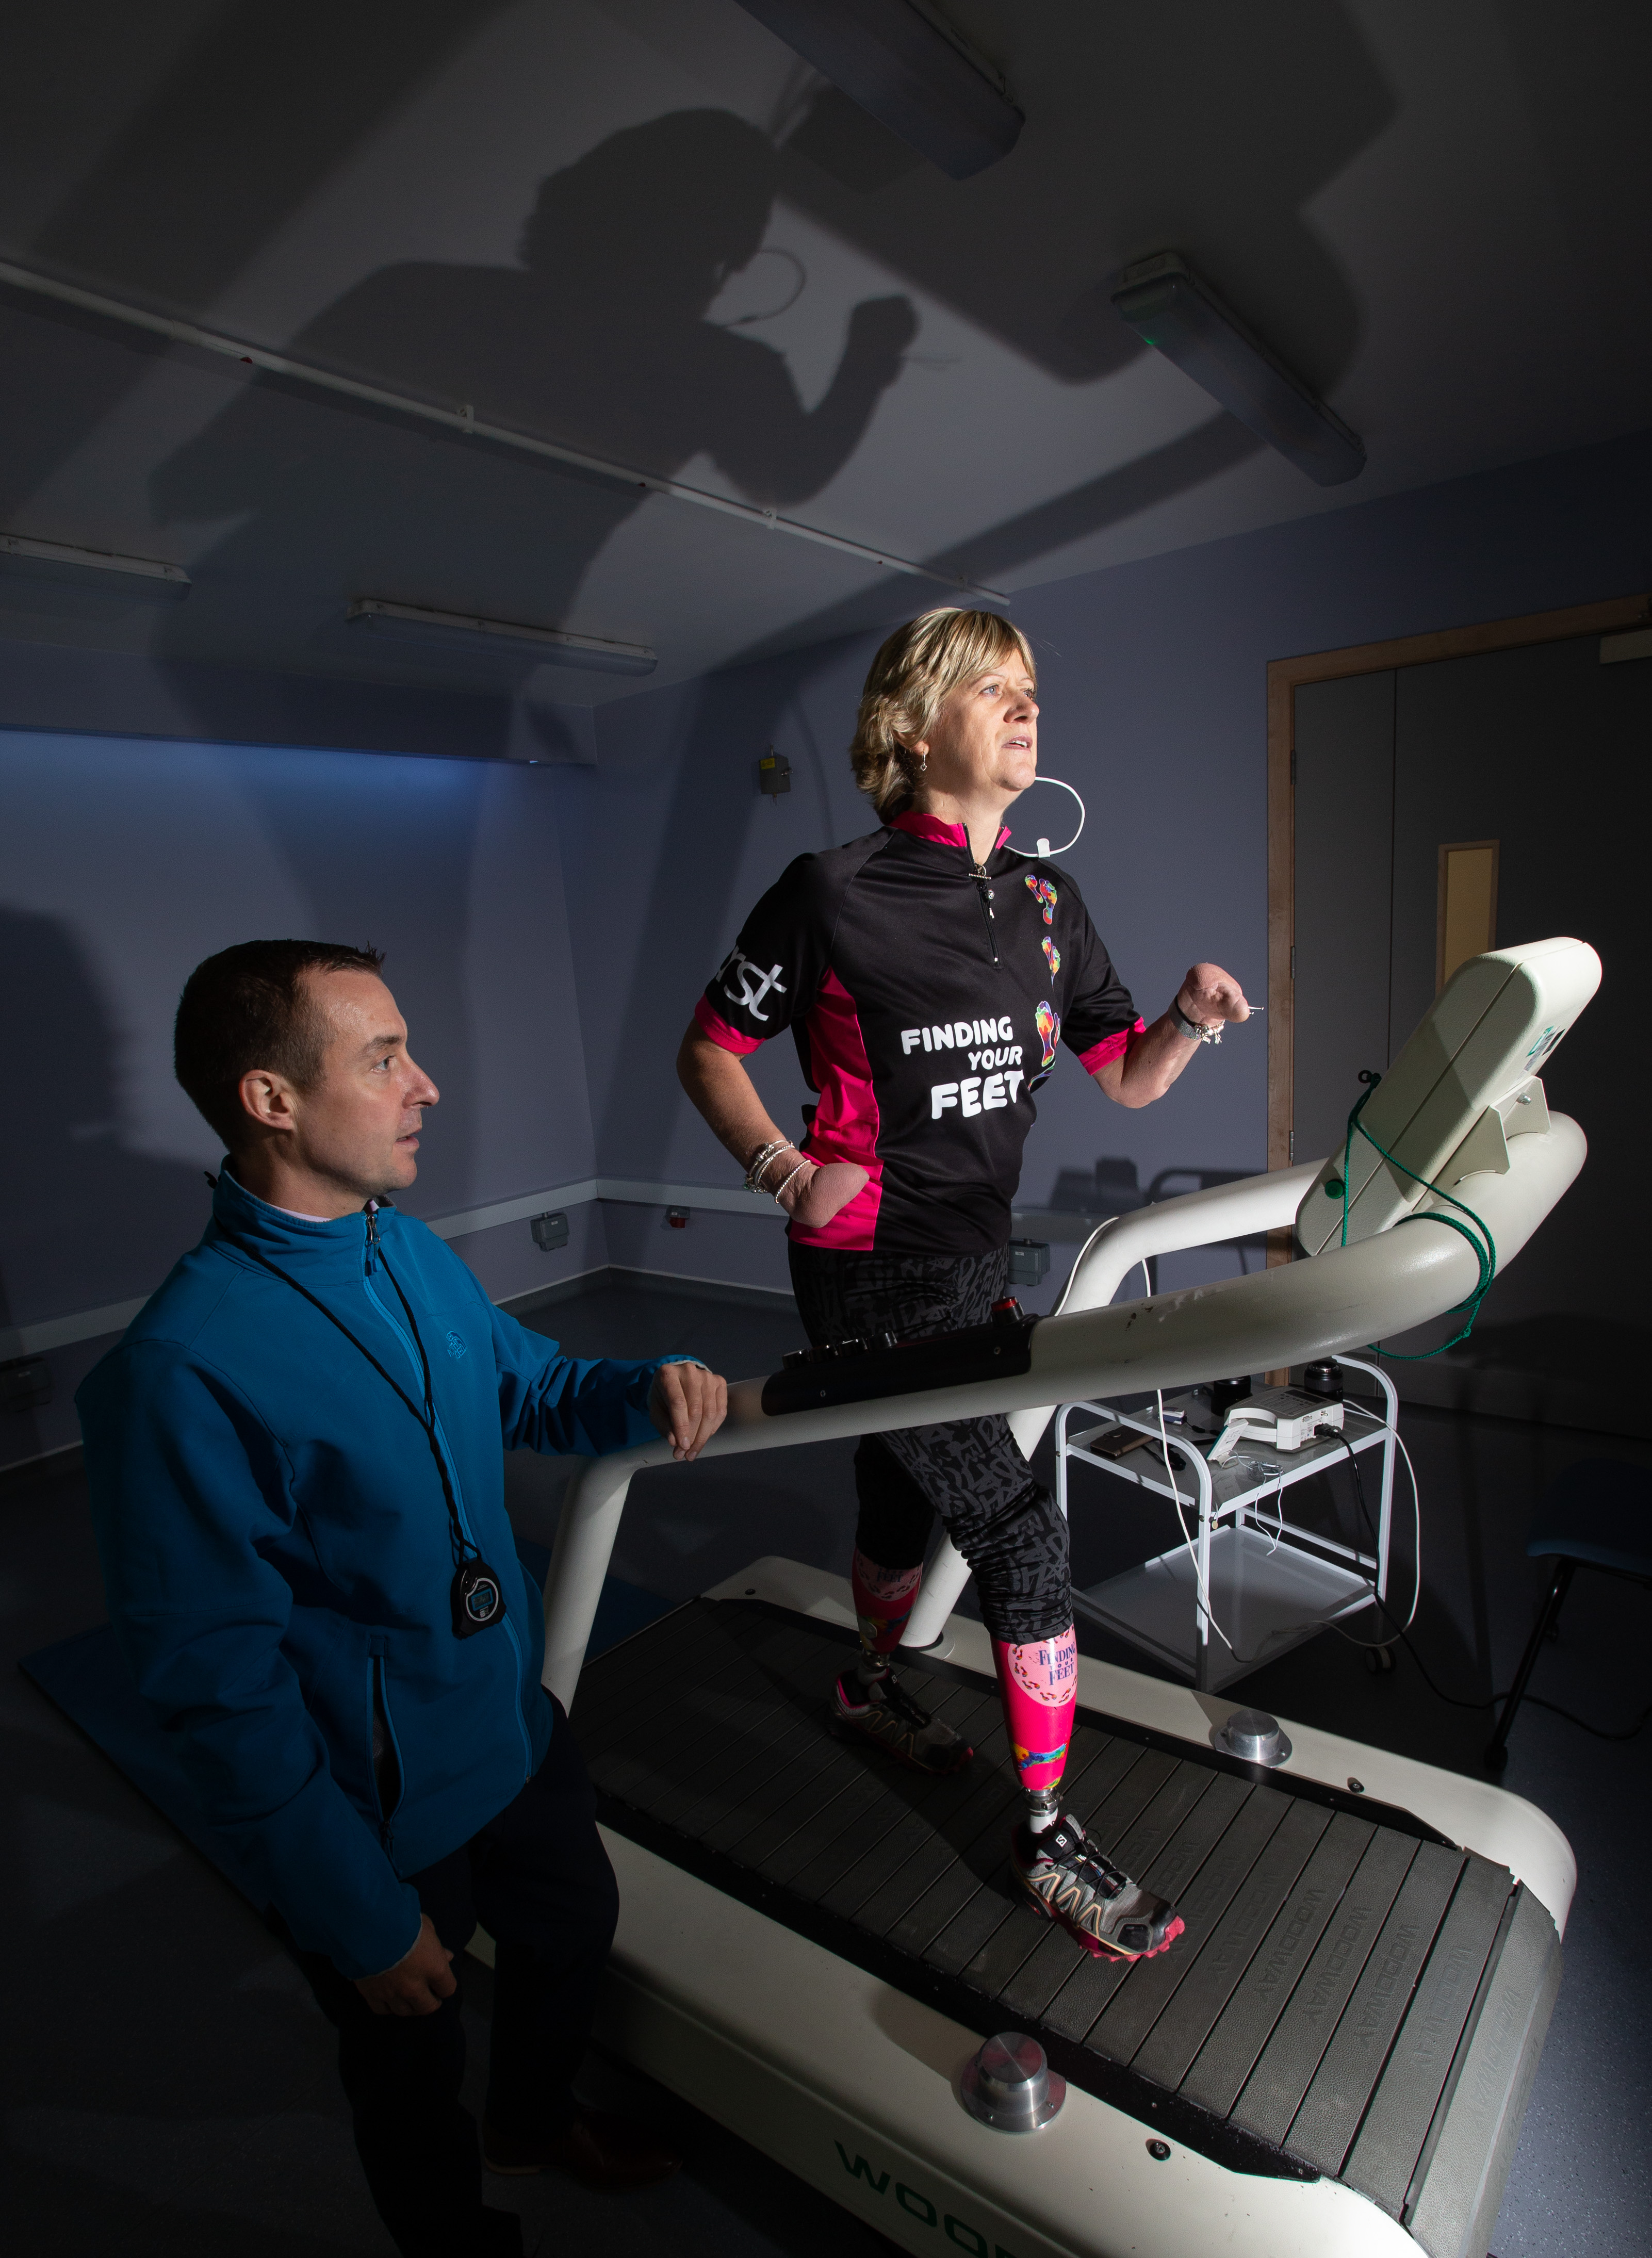 Corinne Hutton on treadmill with UWS staff Lanarkshire campus